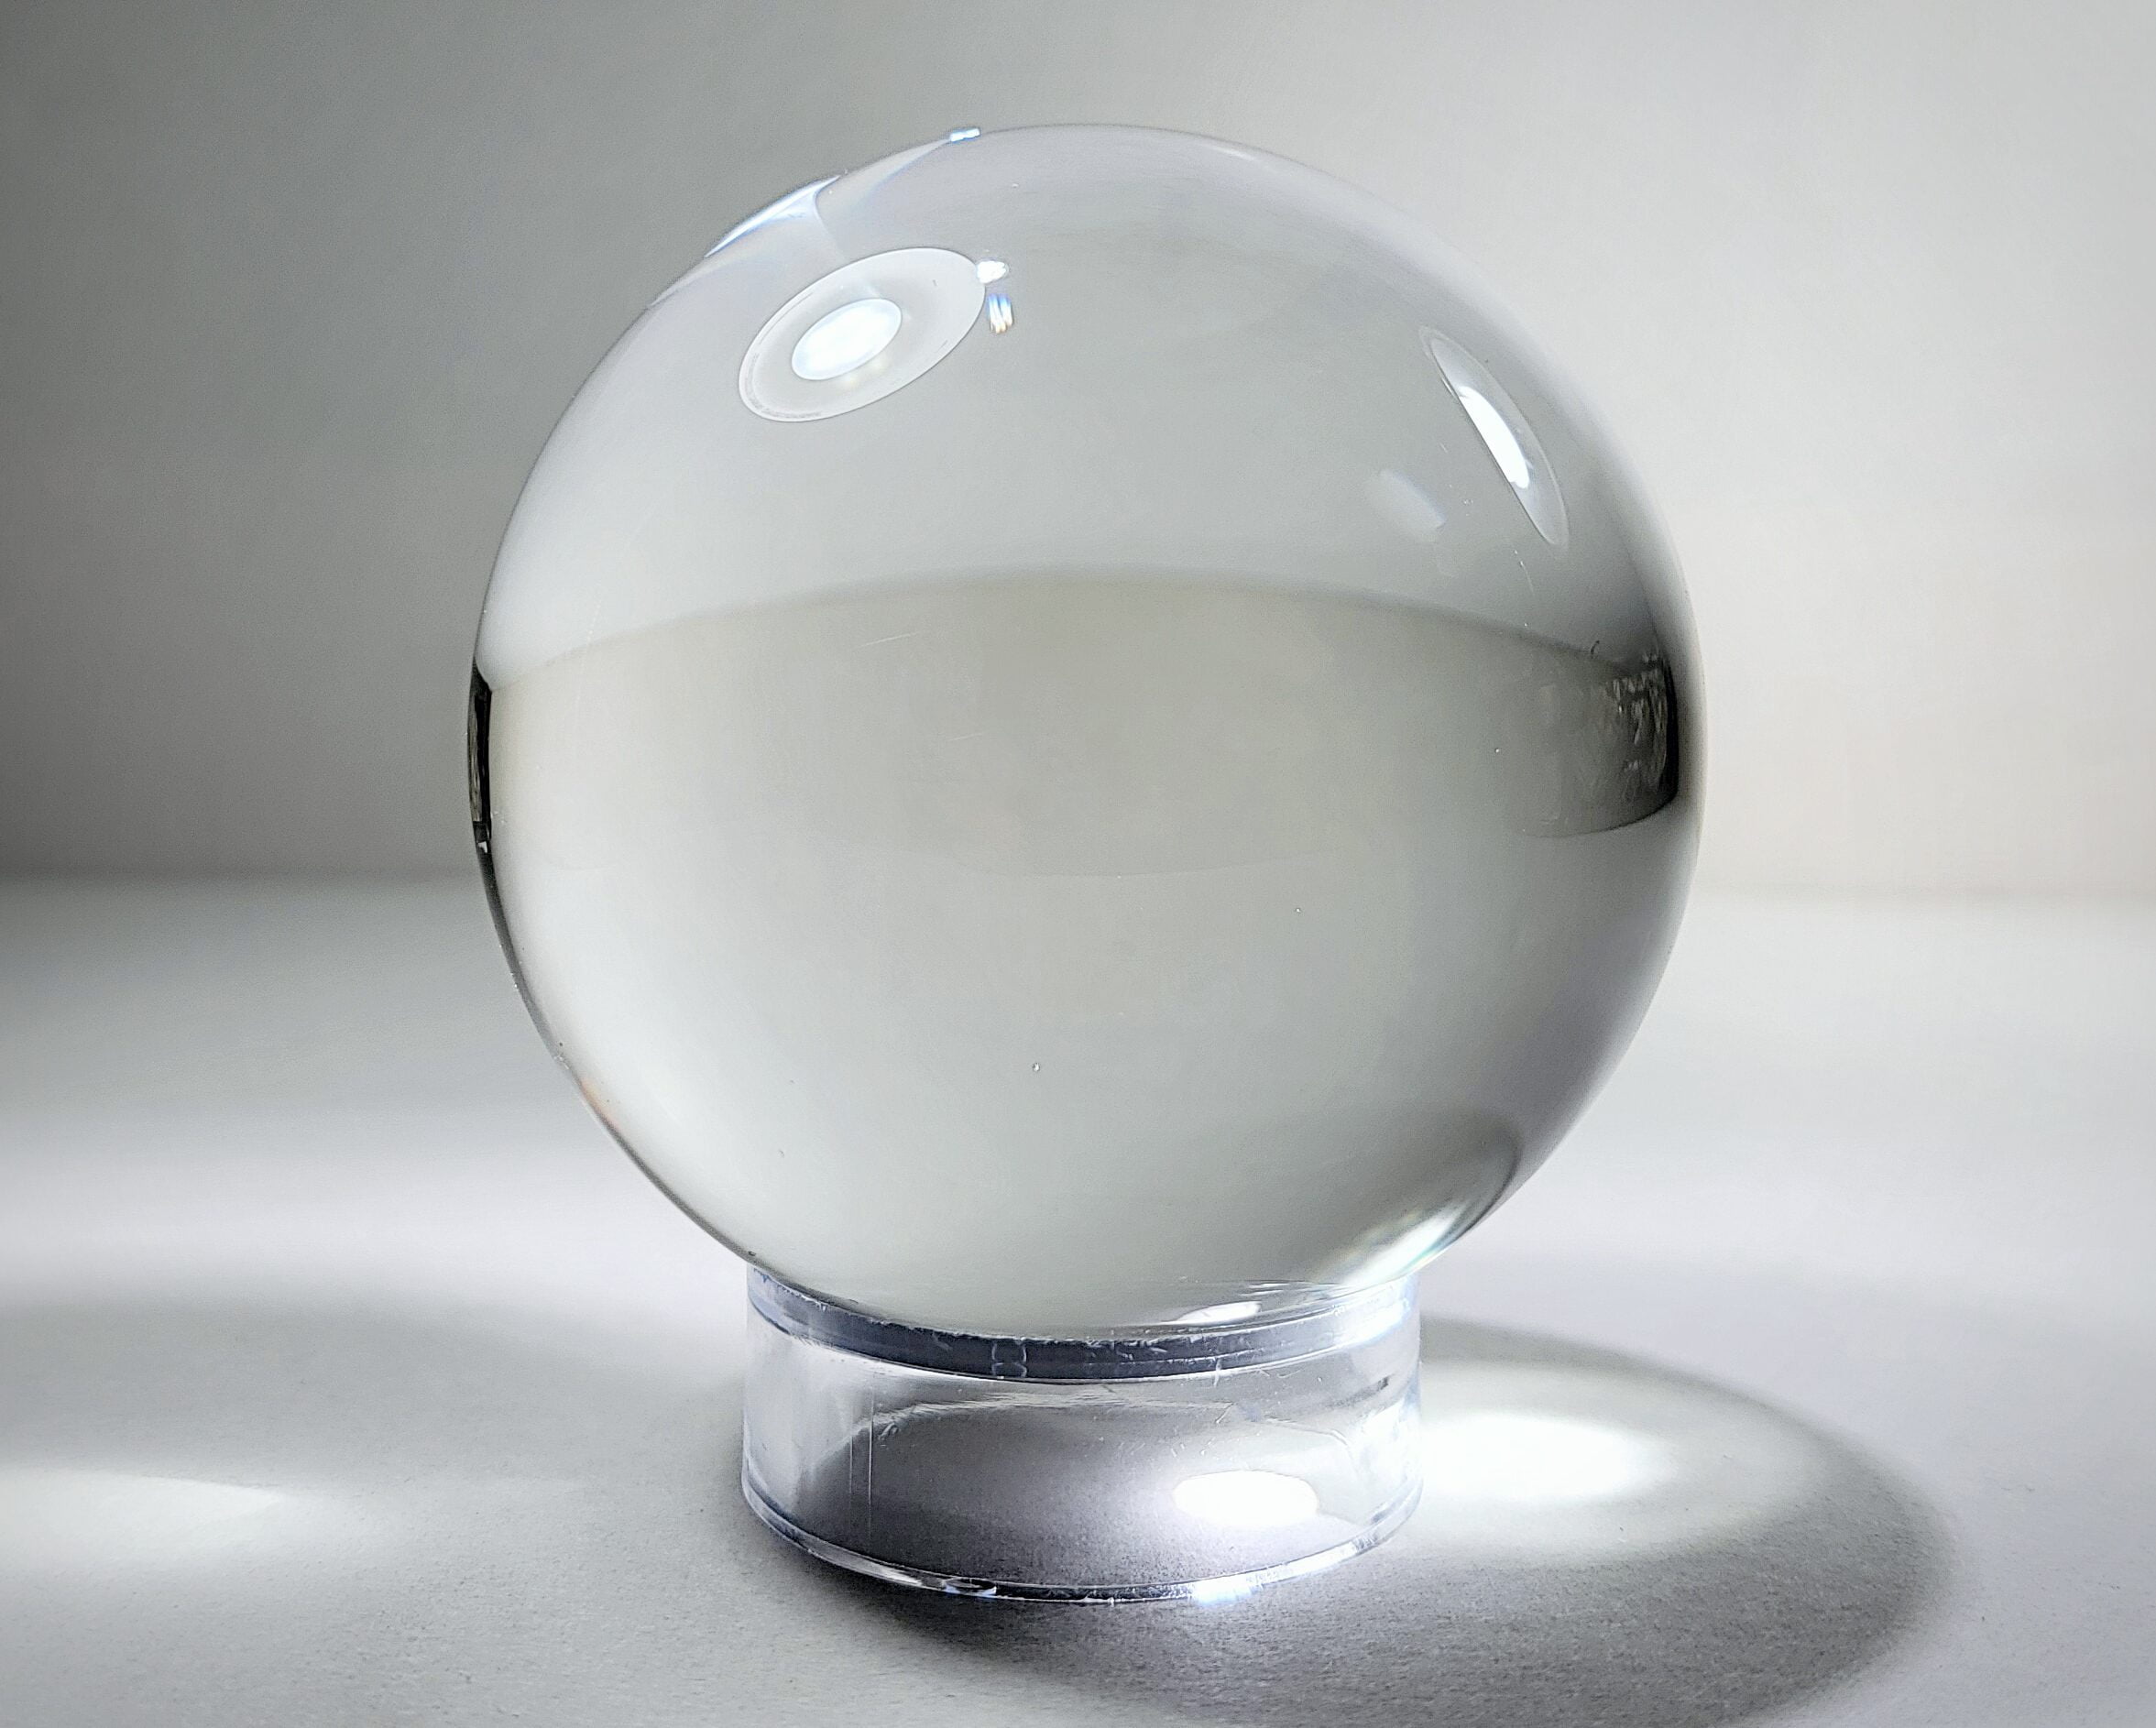 DAM Bola de cristal 15 flash microled branco 10cm 10x10x11cm. Cor